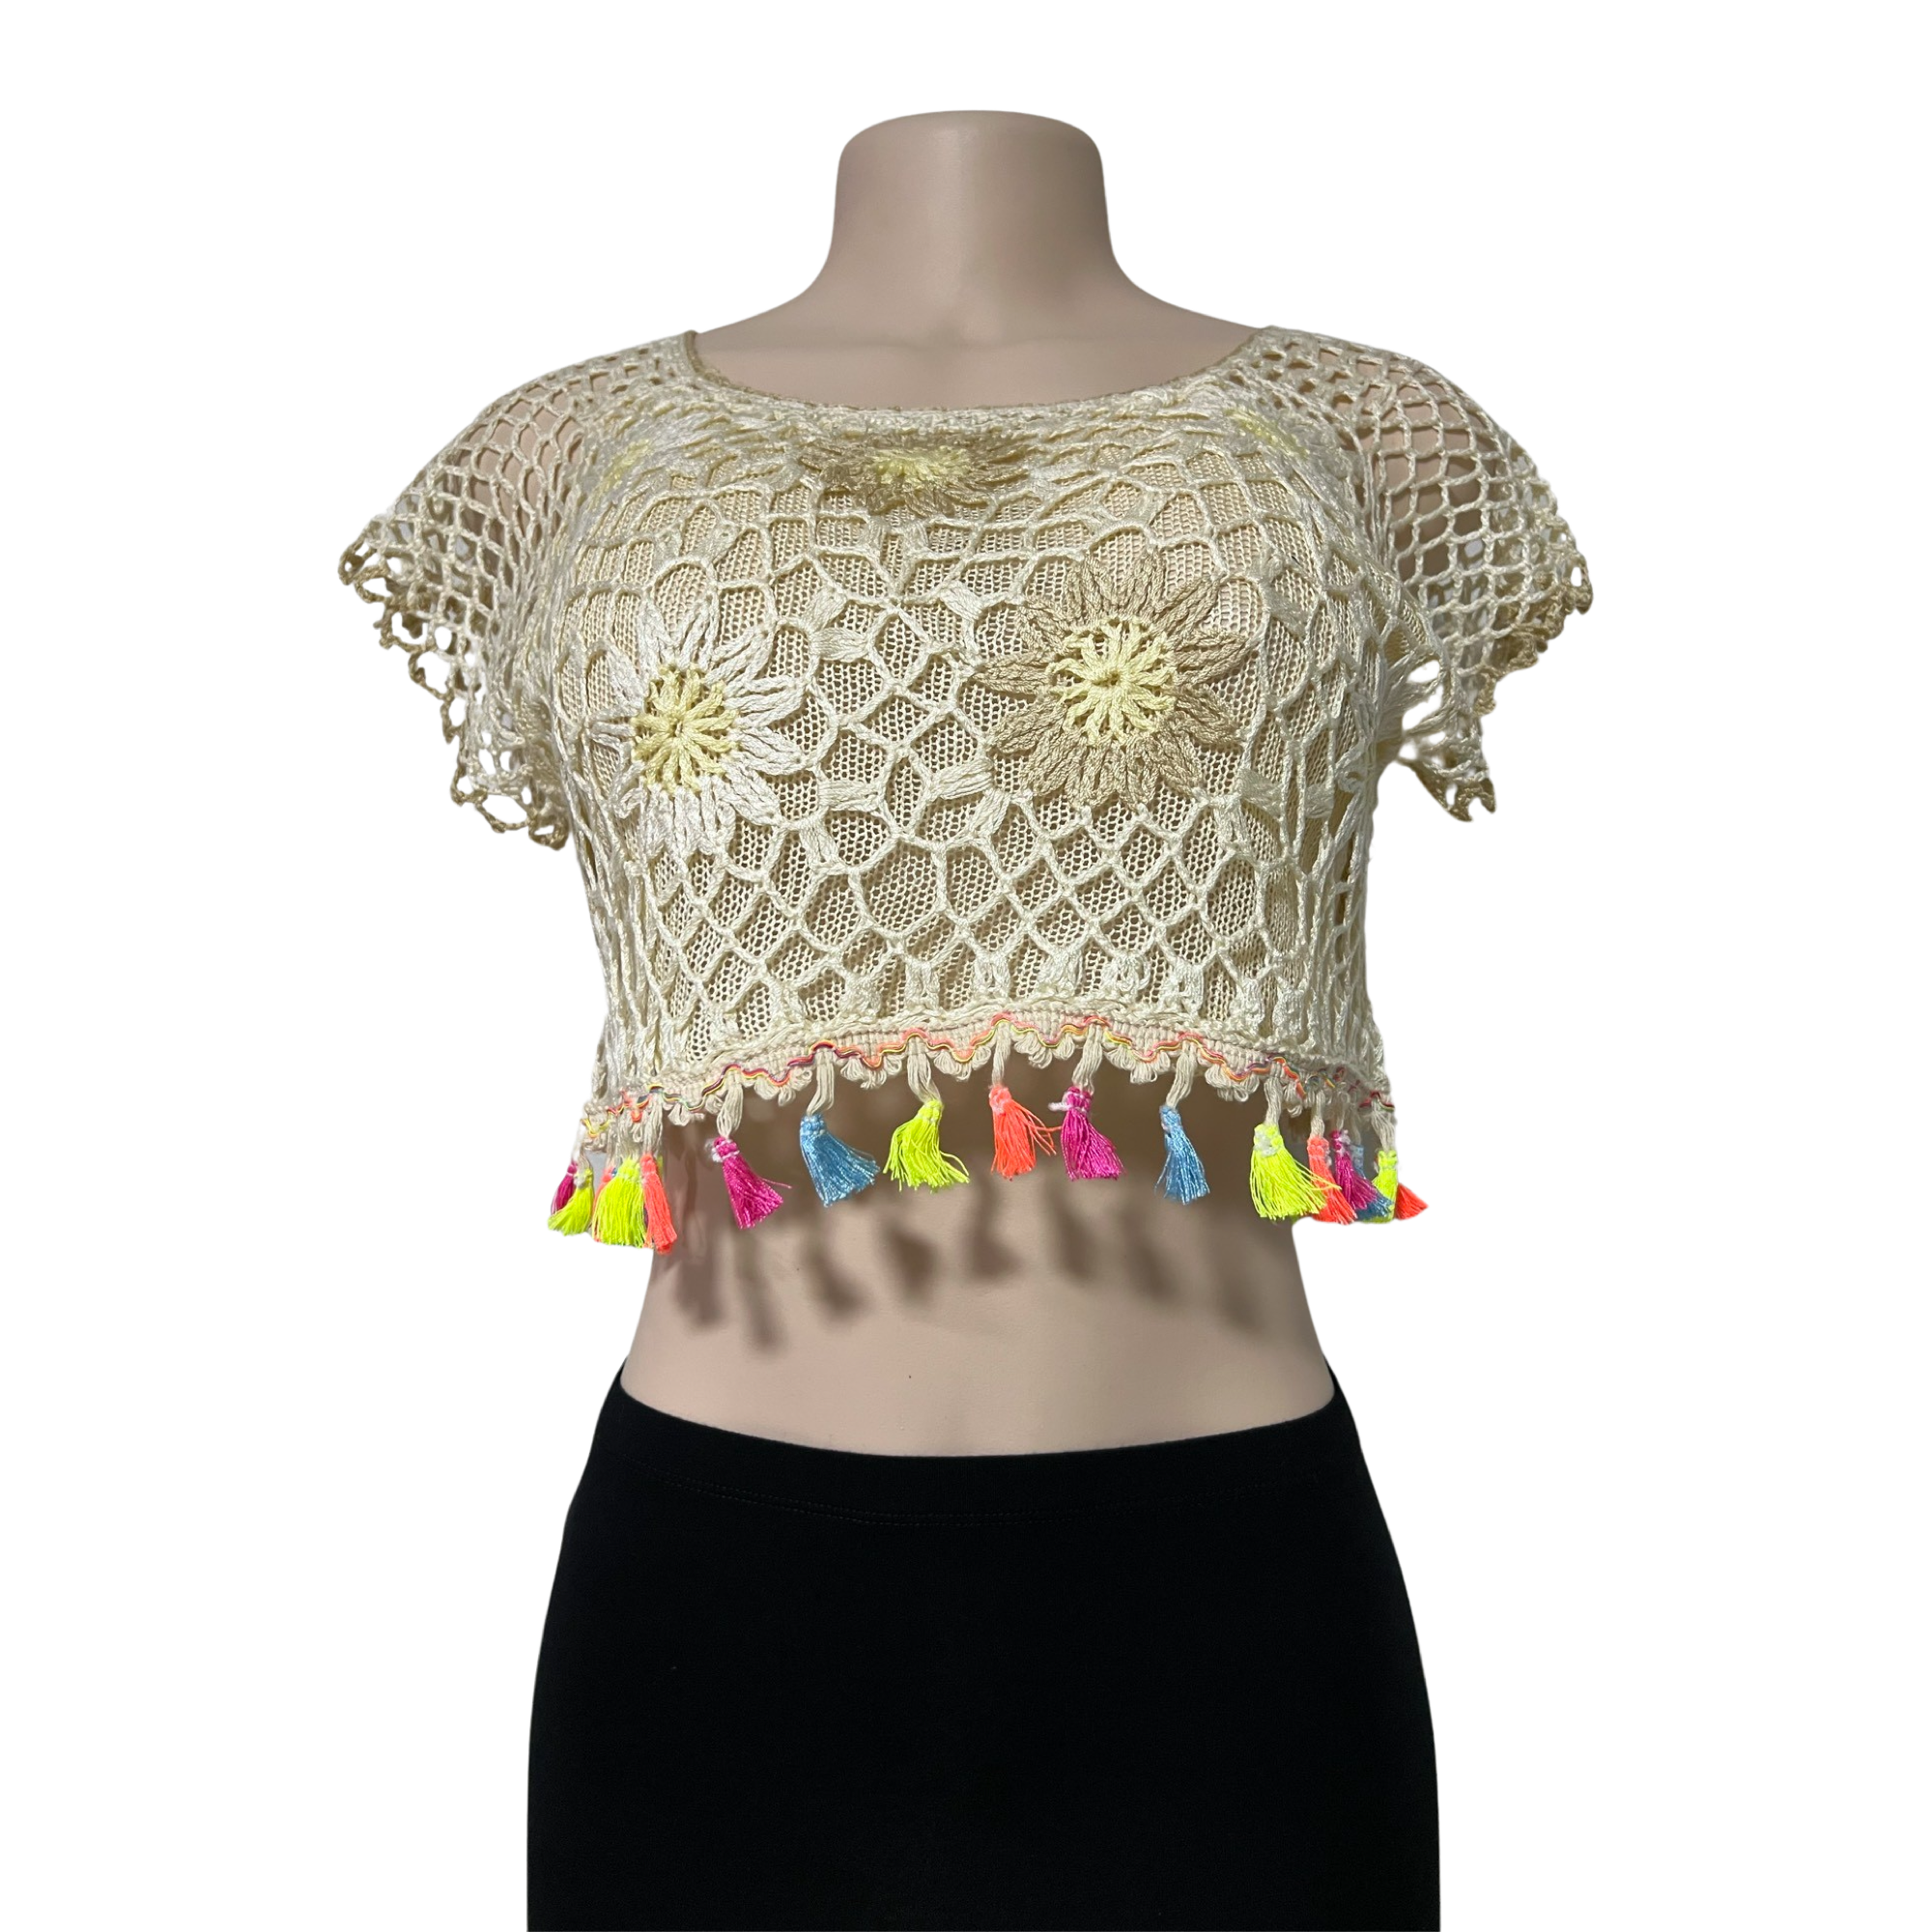 Women's See Through Mesh Lace Crop Top Crochet Short Sleeve.